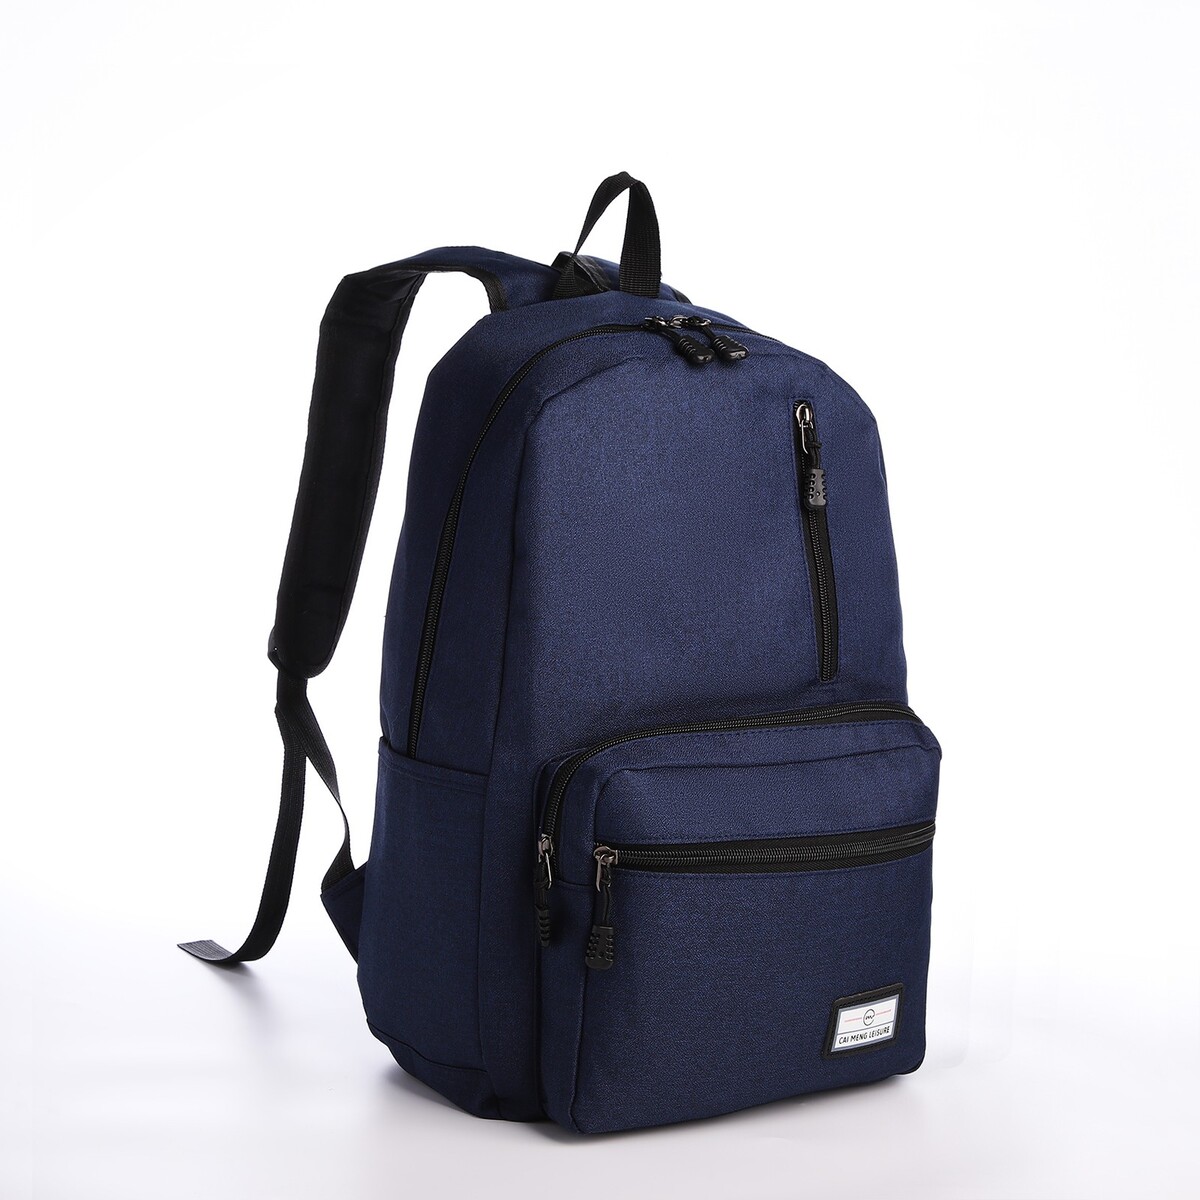 Рюкзак молодежный из текстиля на молнии, 5 карманов, usb, цвет синий рюкзак молодежный из текстиля на молнии 5 карманов usb синий